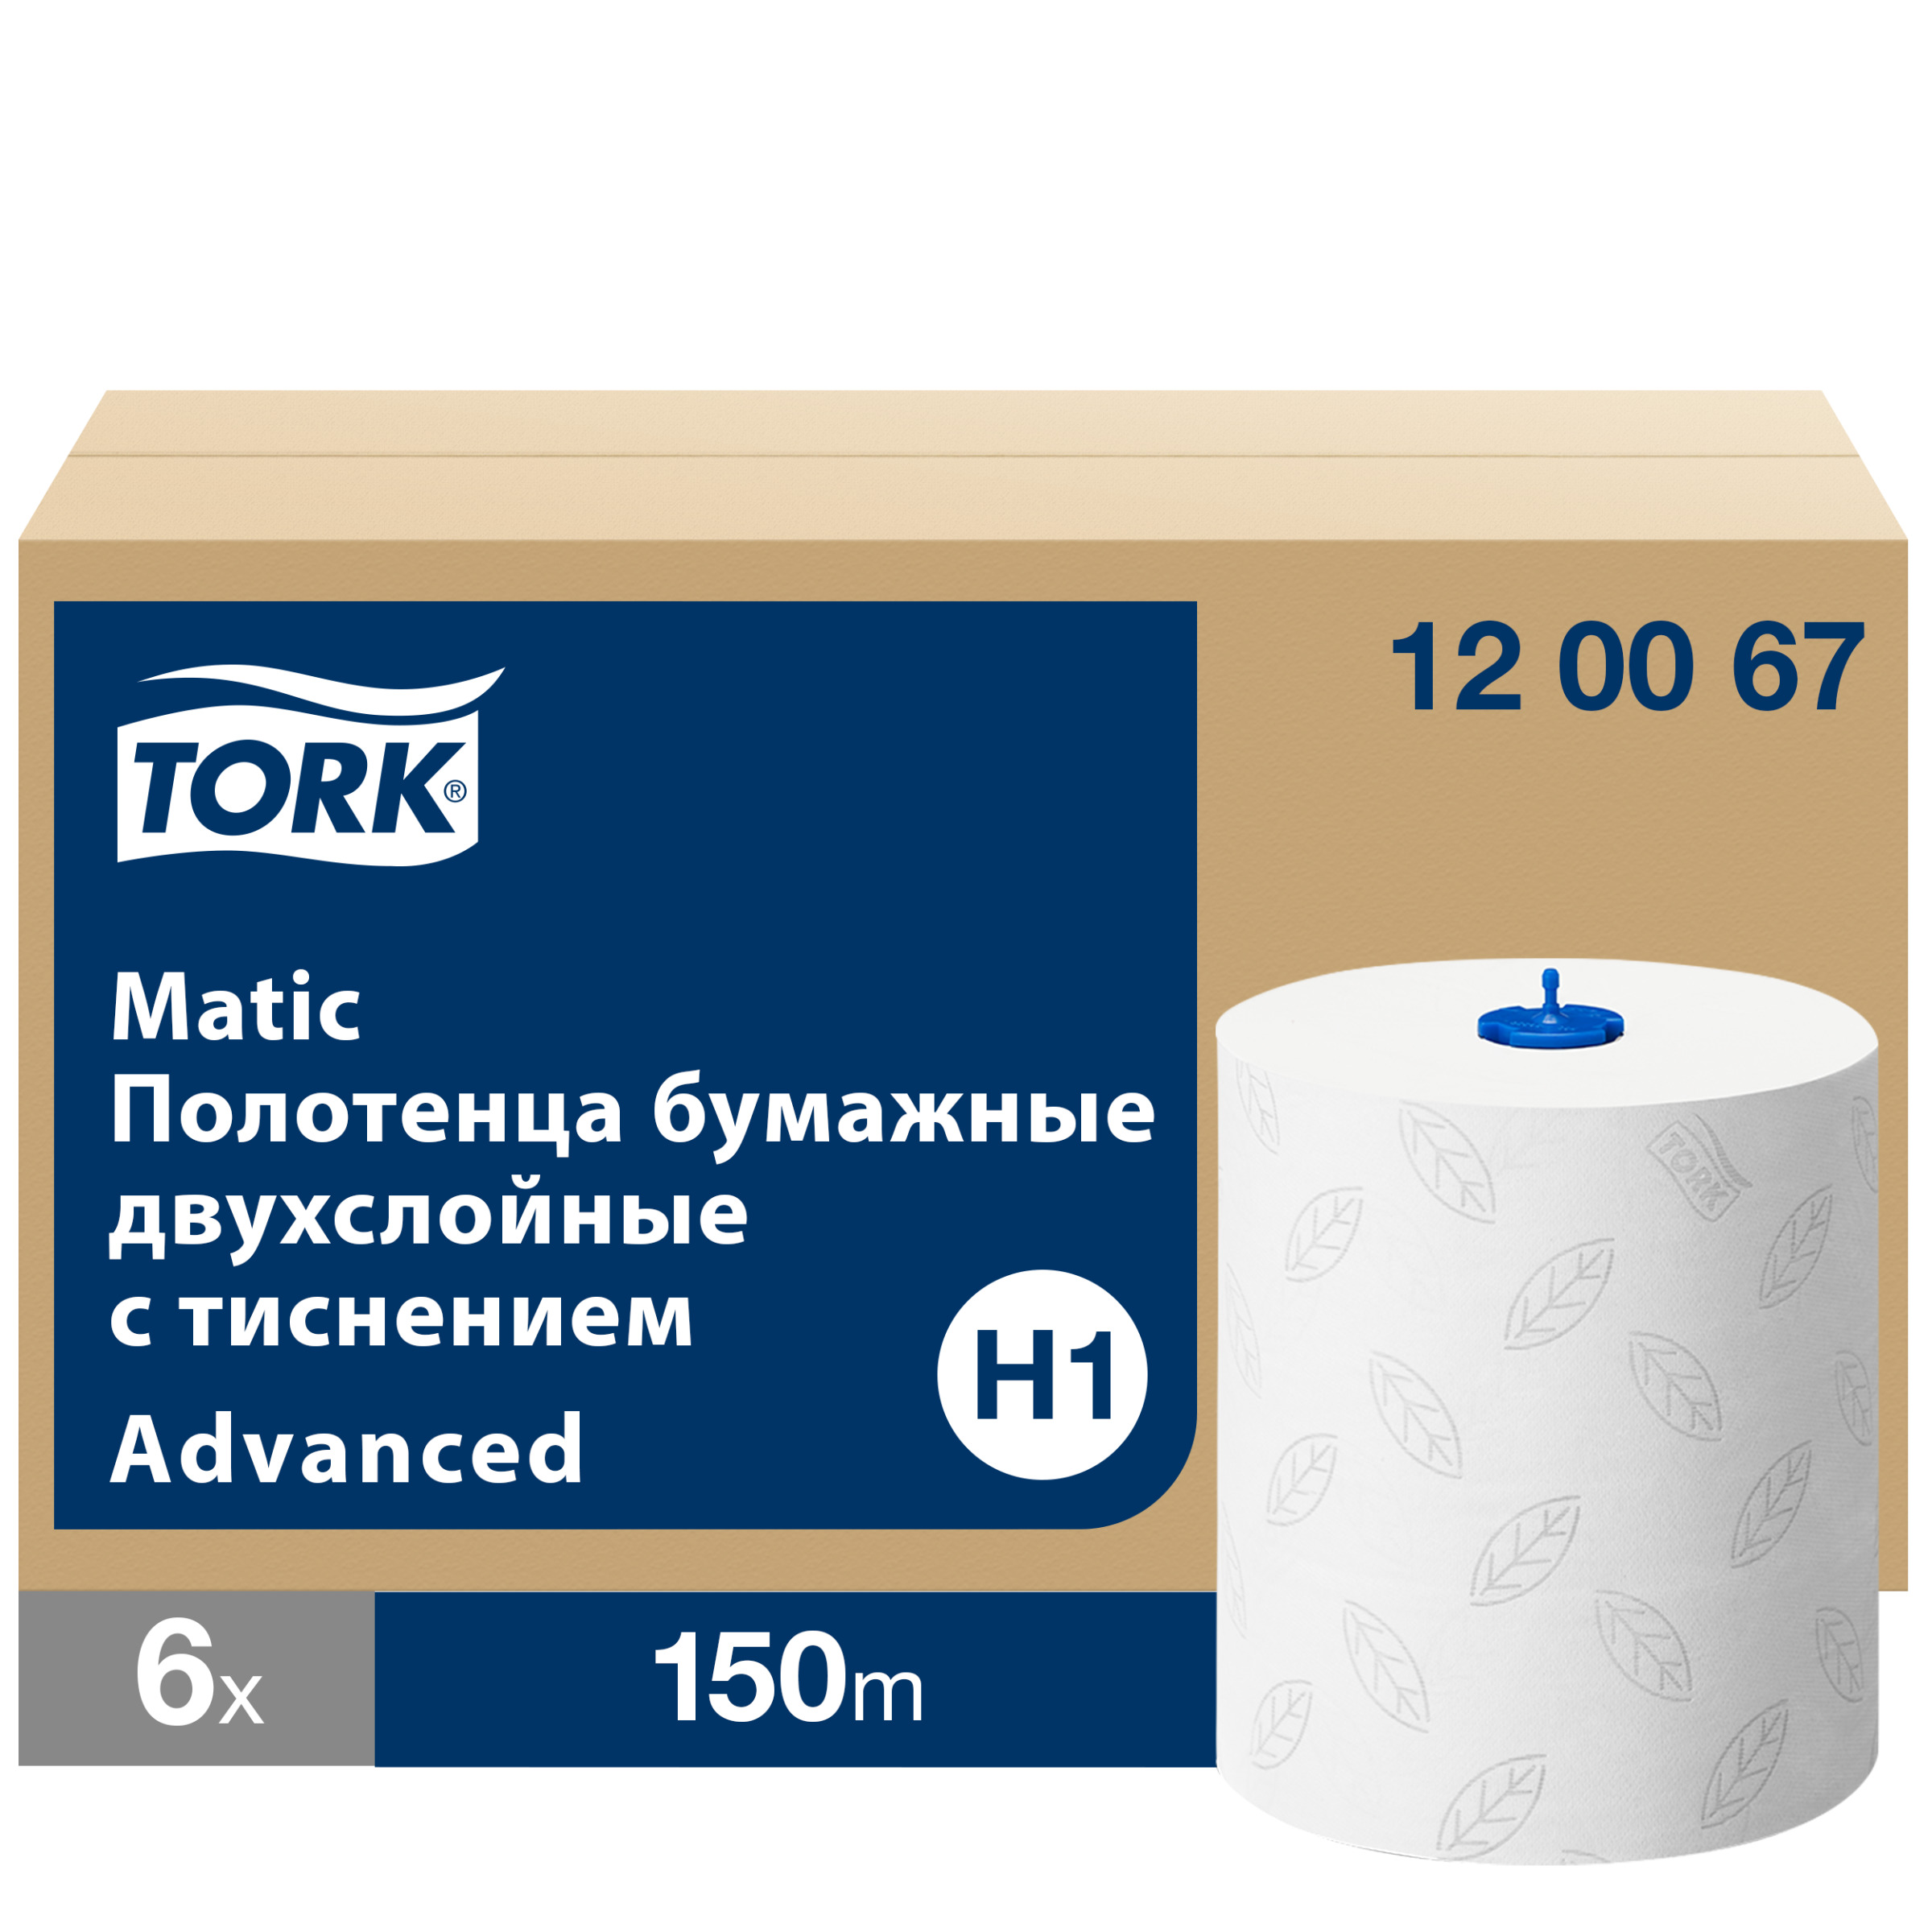 Полотенца бумажные Tork Matic Advanced в рулонах, H1, лист 150мХ21см, 2 слоя, 6 шт